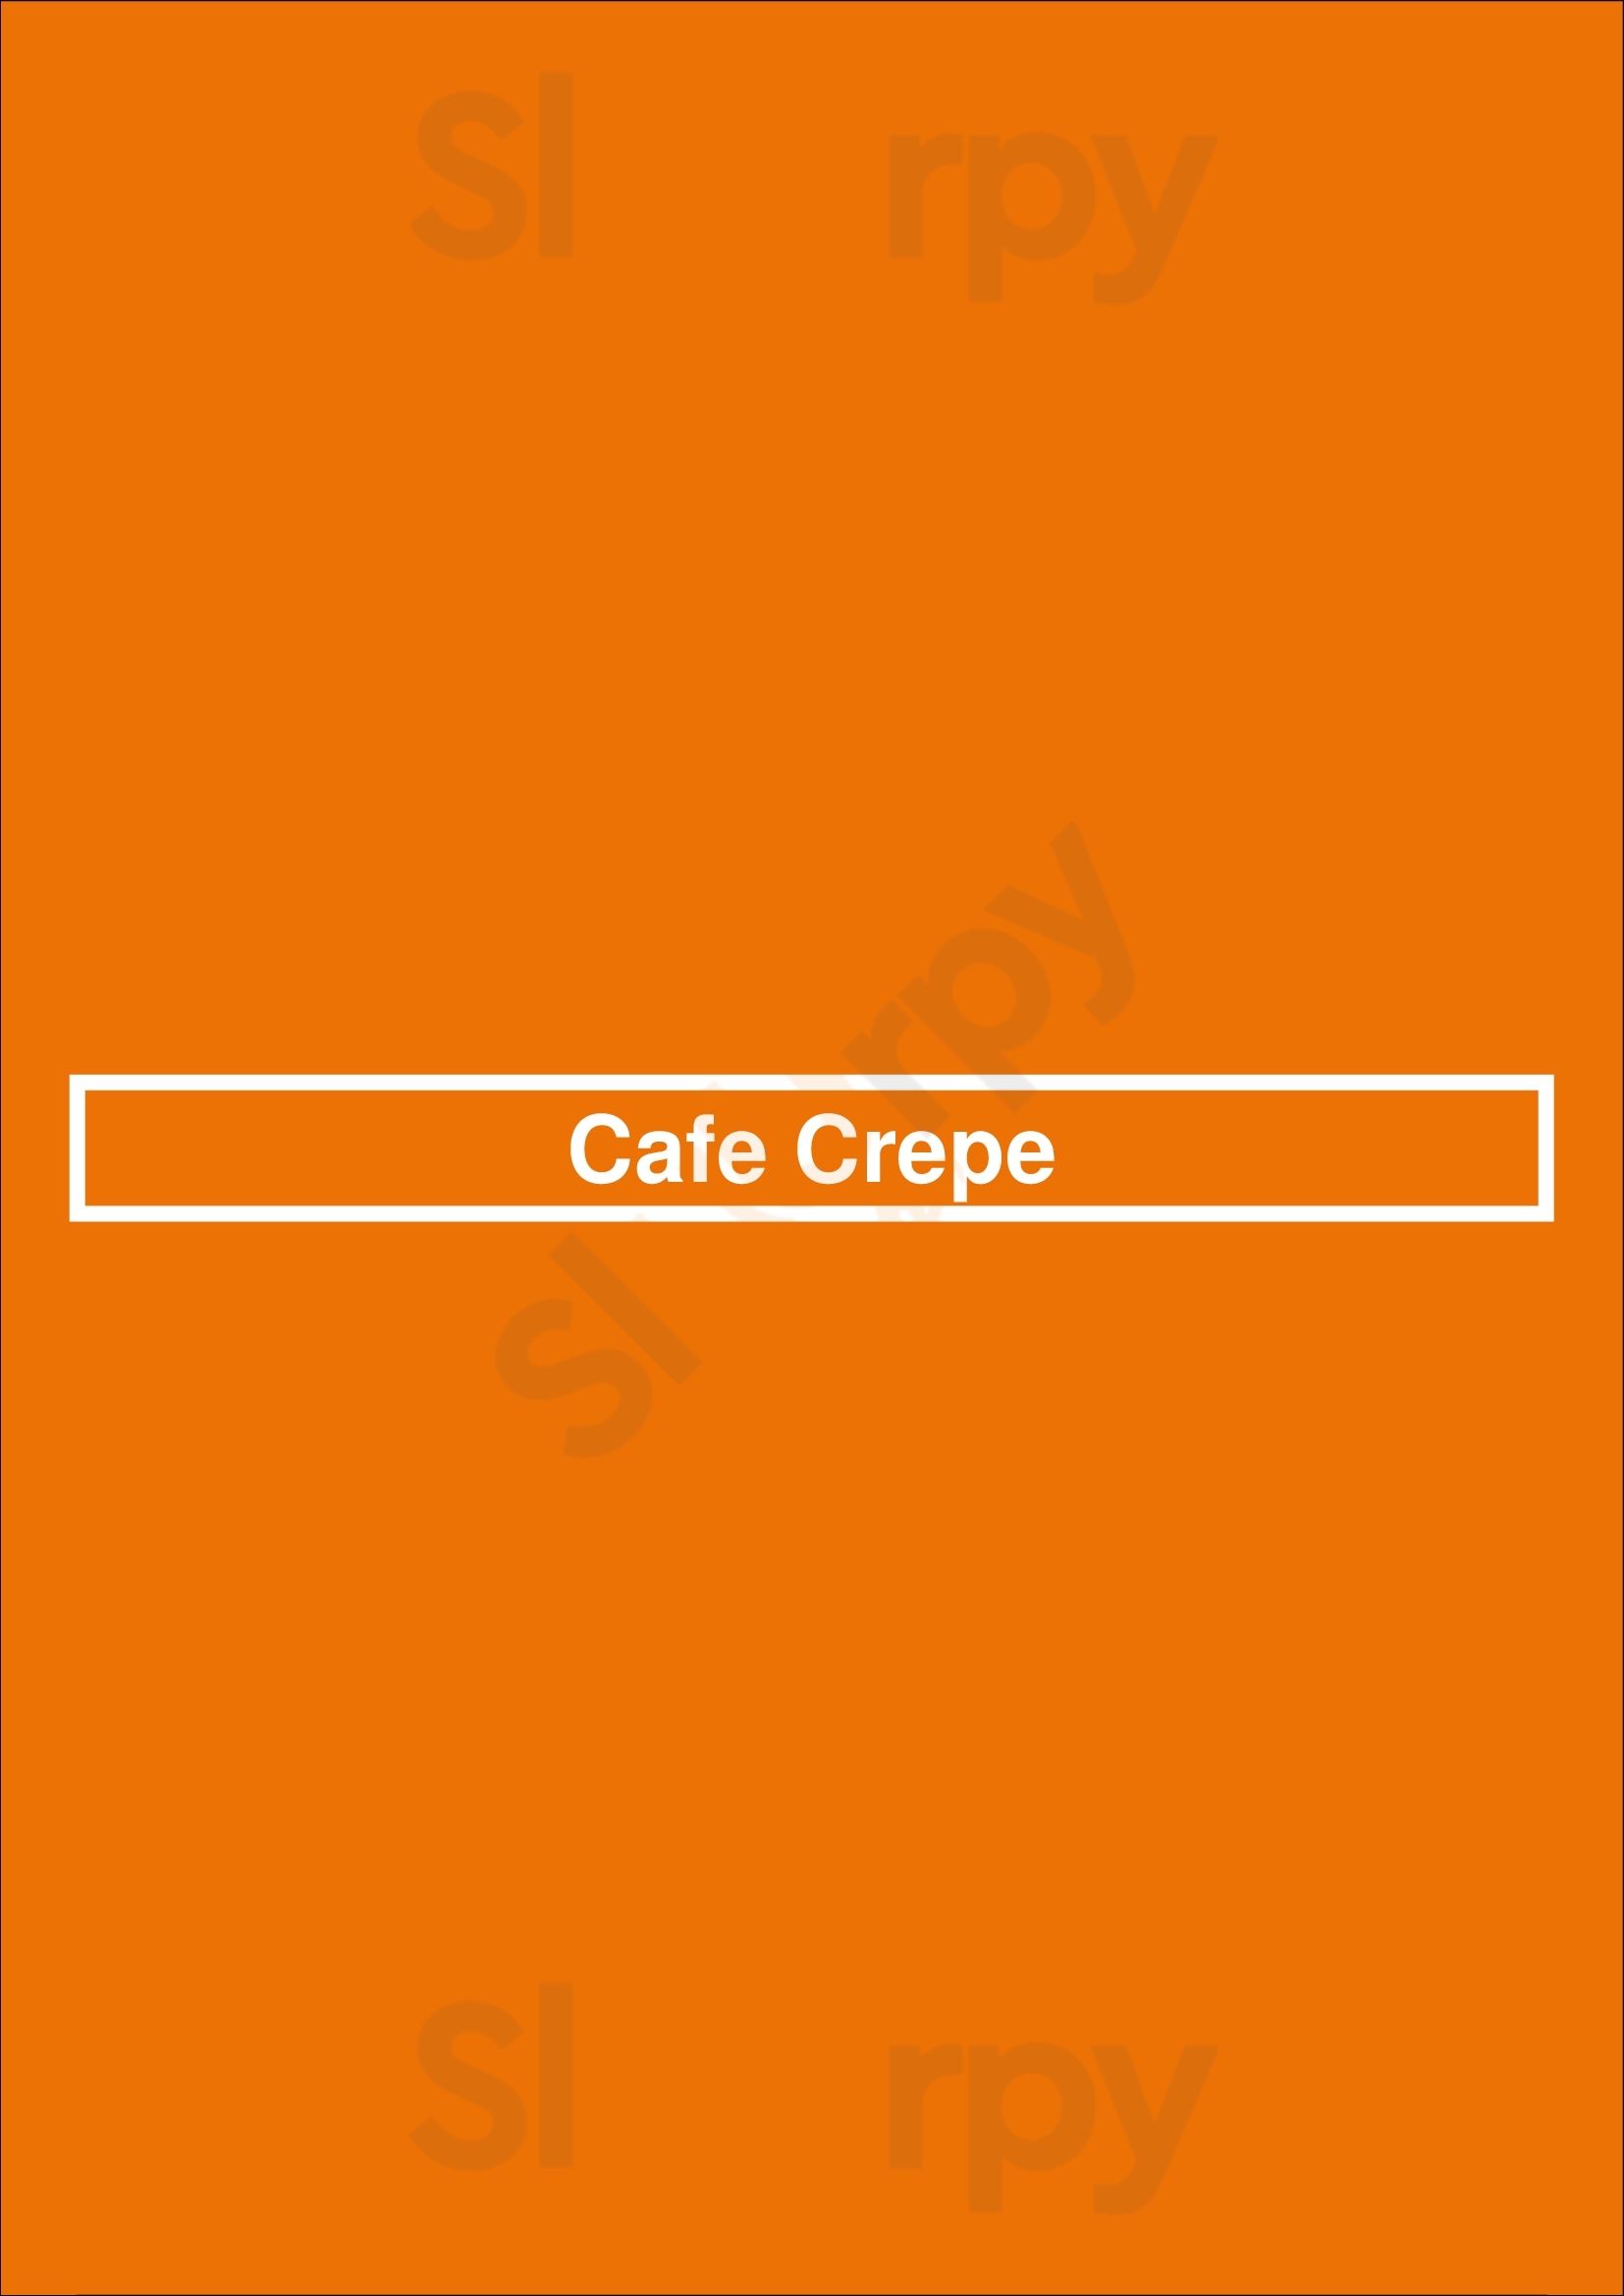 Cafe Crepe Vancouver Menu - 1